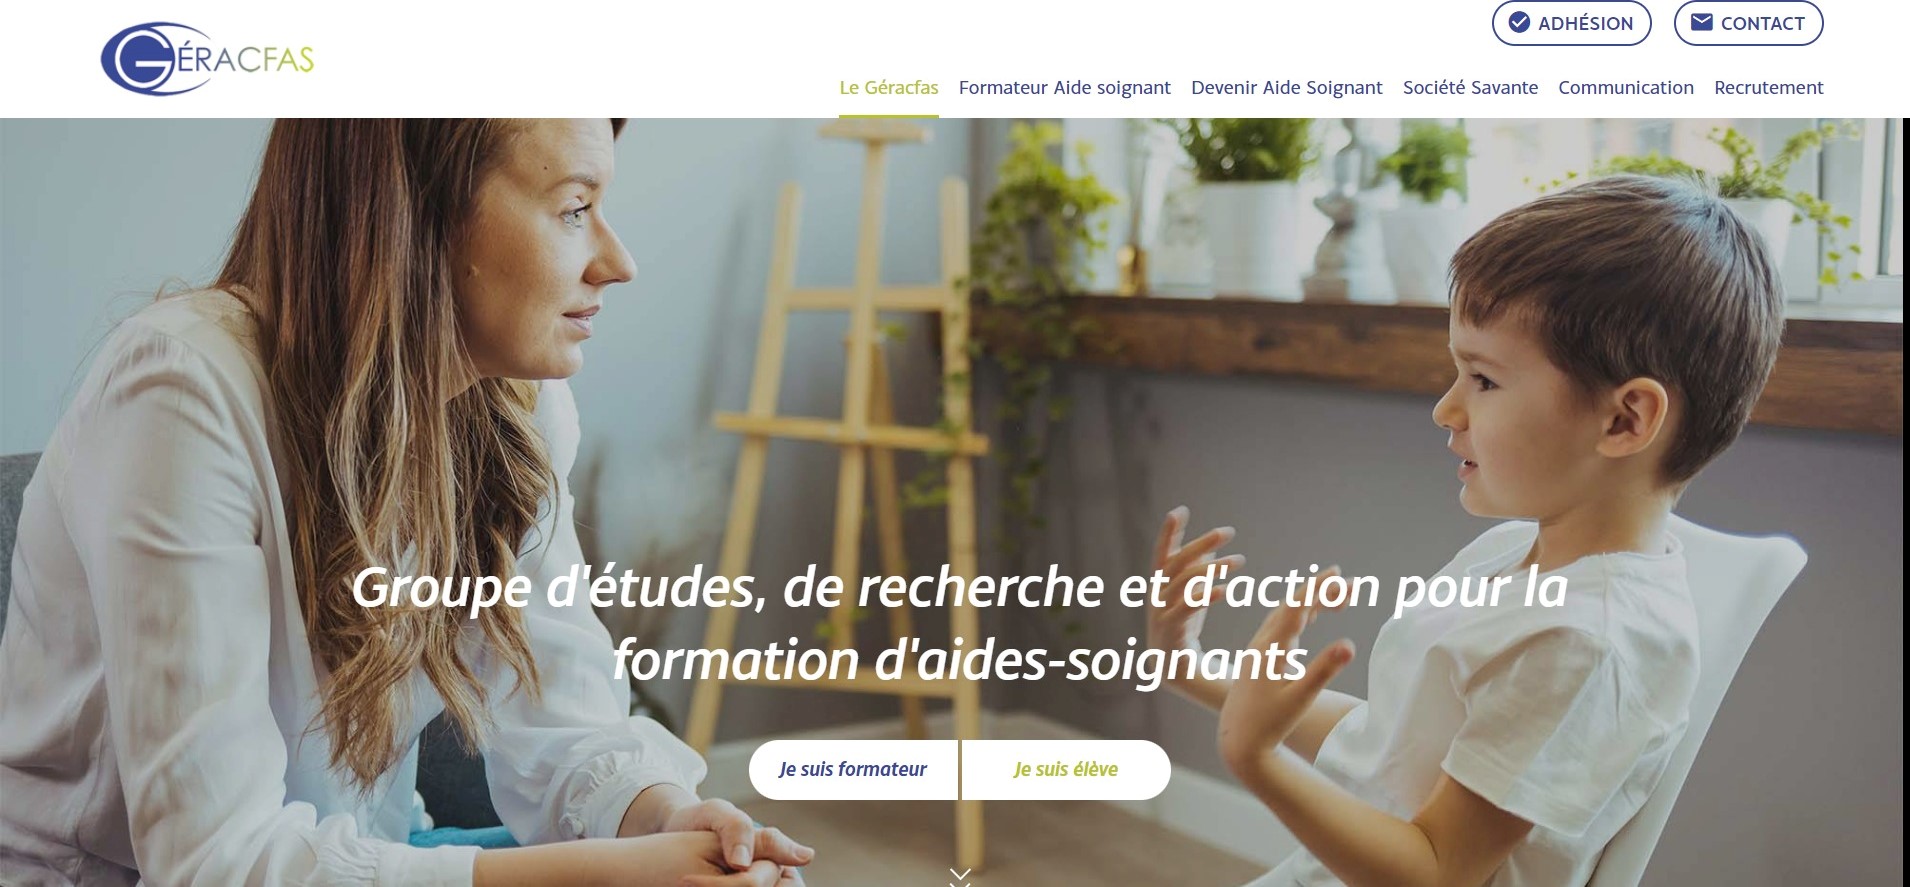 Refonte du site internet du GERACFAS, association des formateurs en IFSI et IFASI en France.